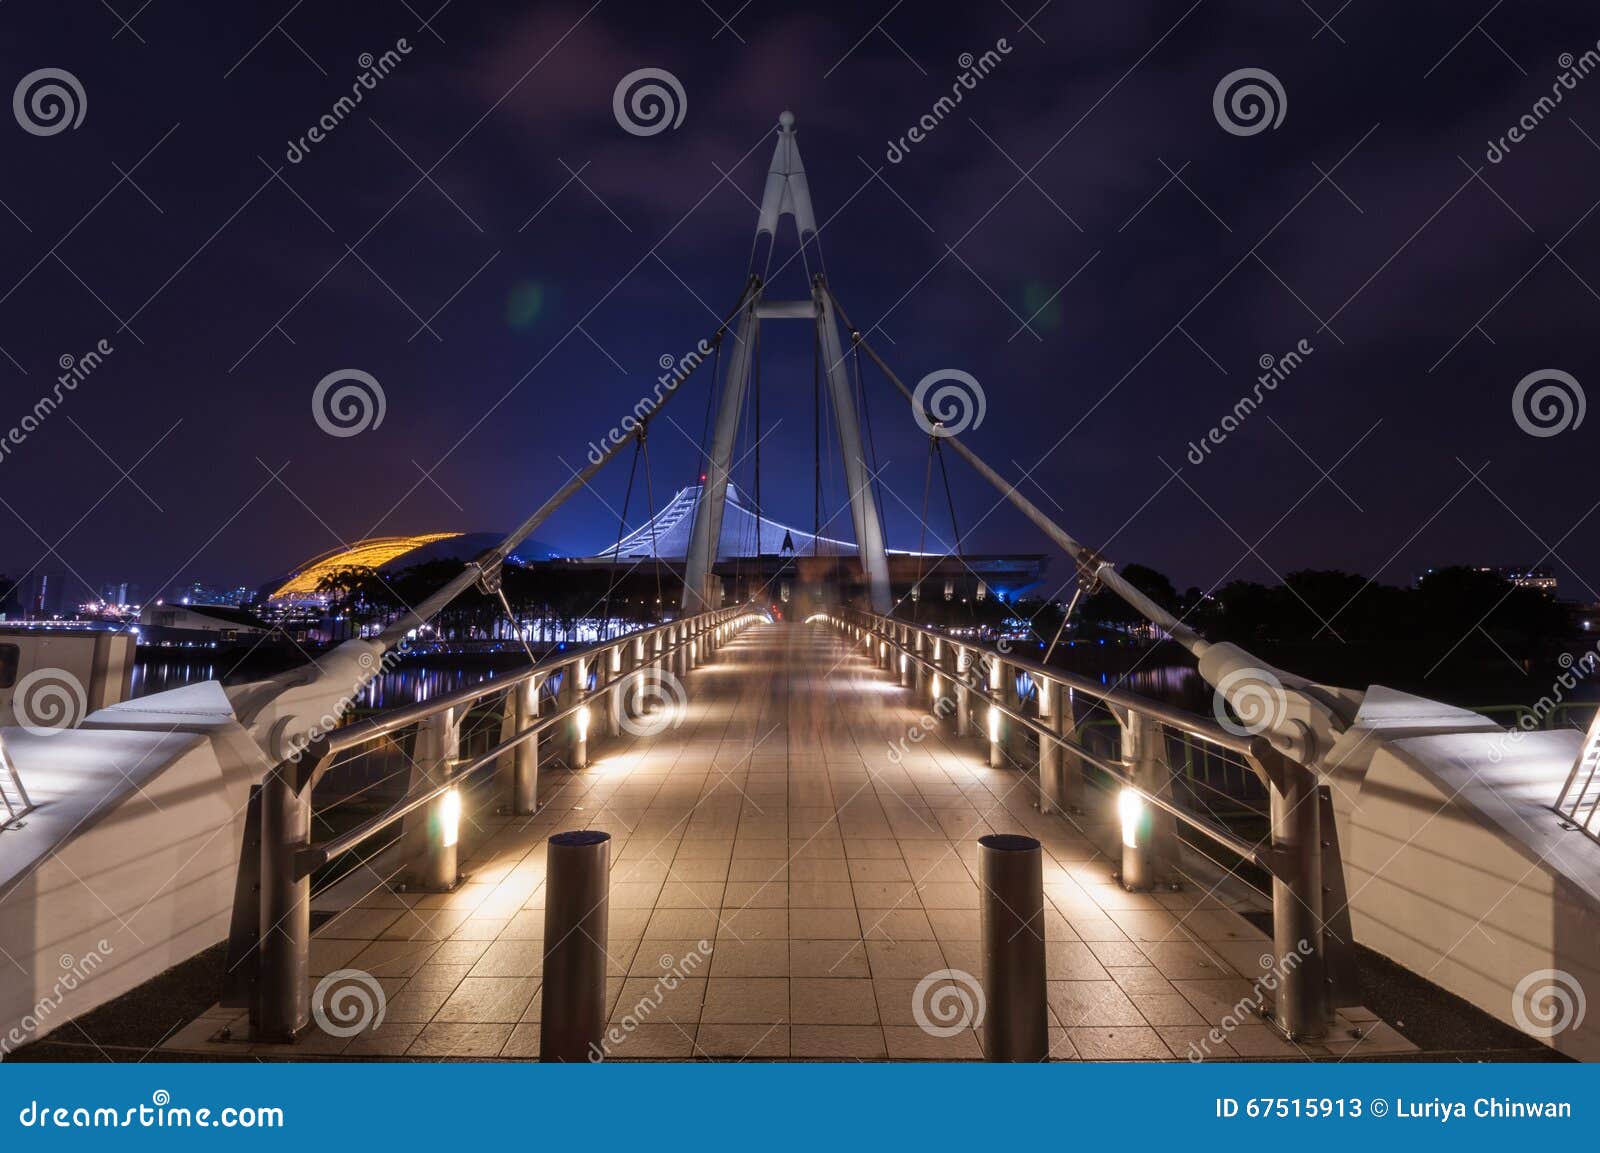 tanjong rhu suspension bridge at night